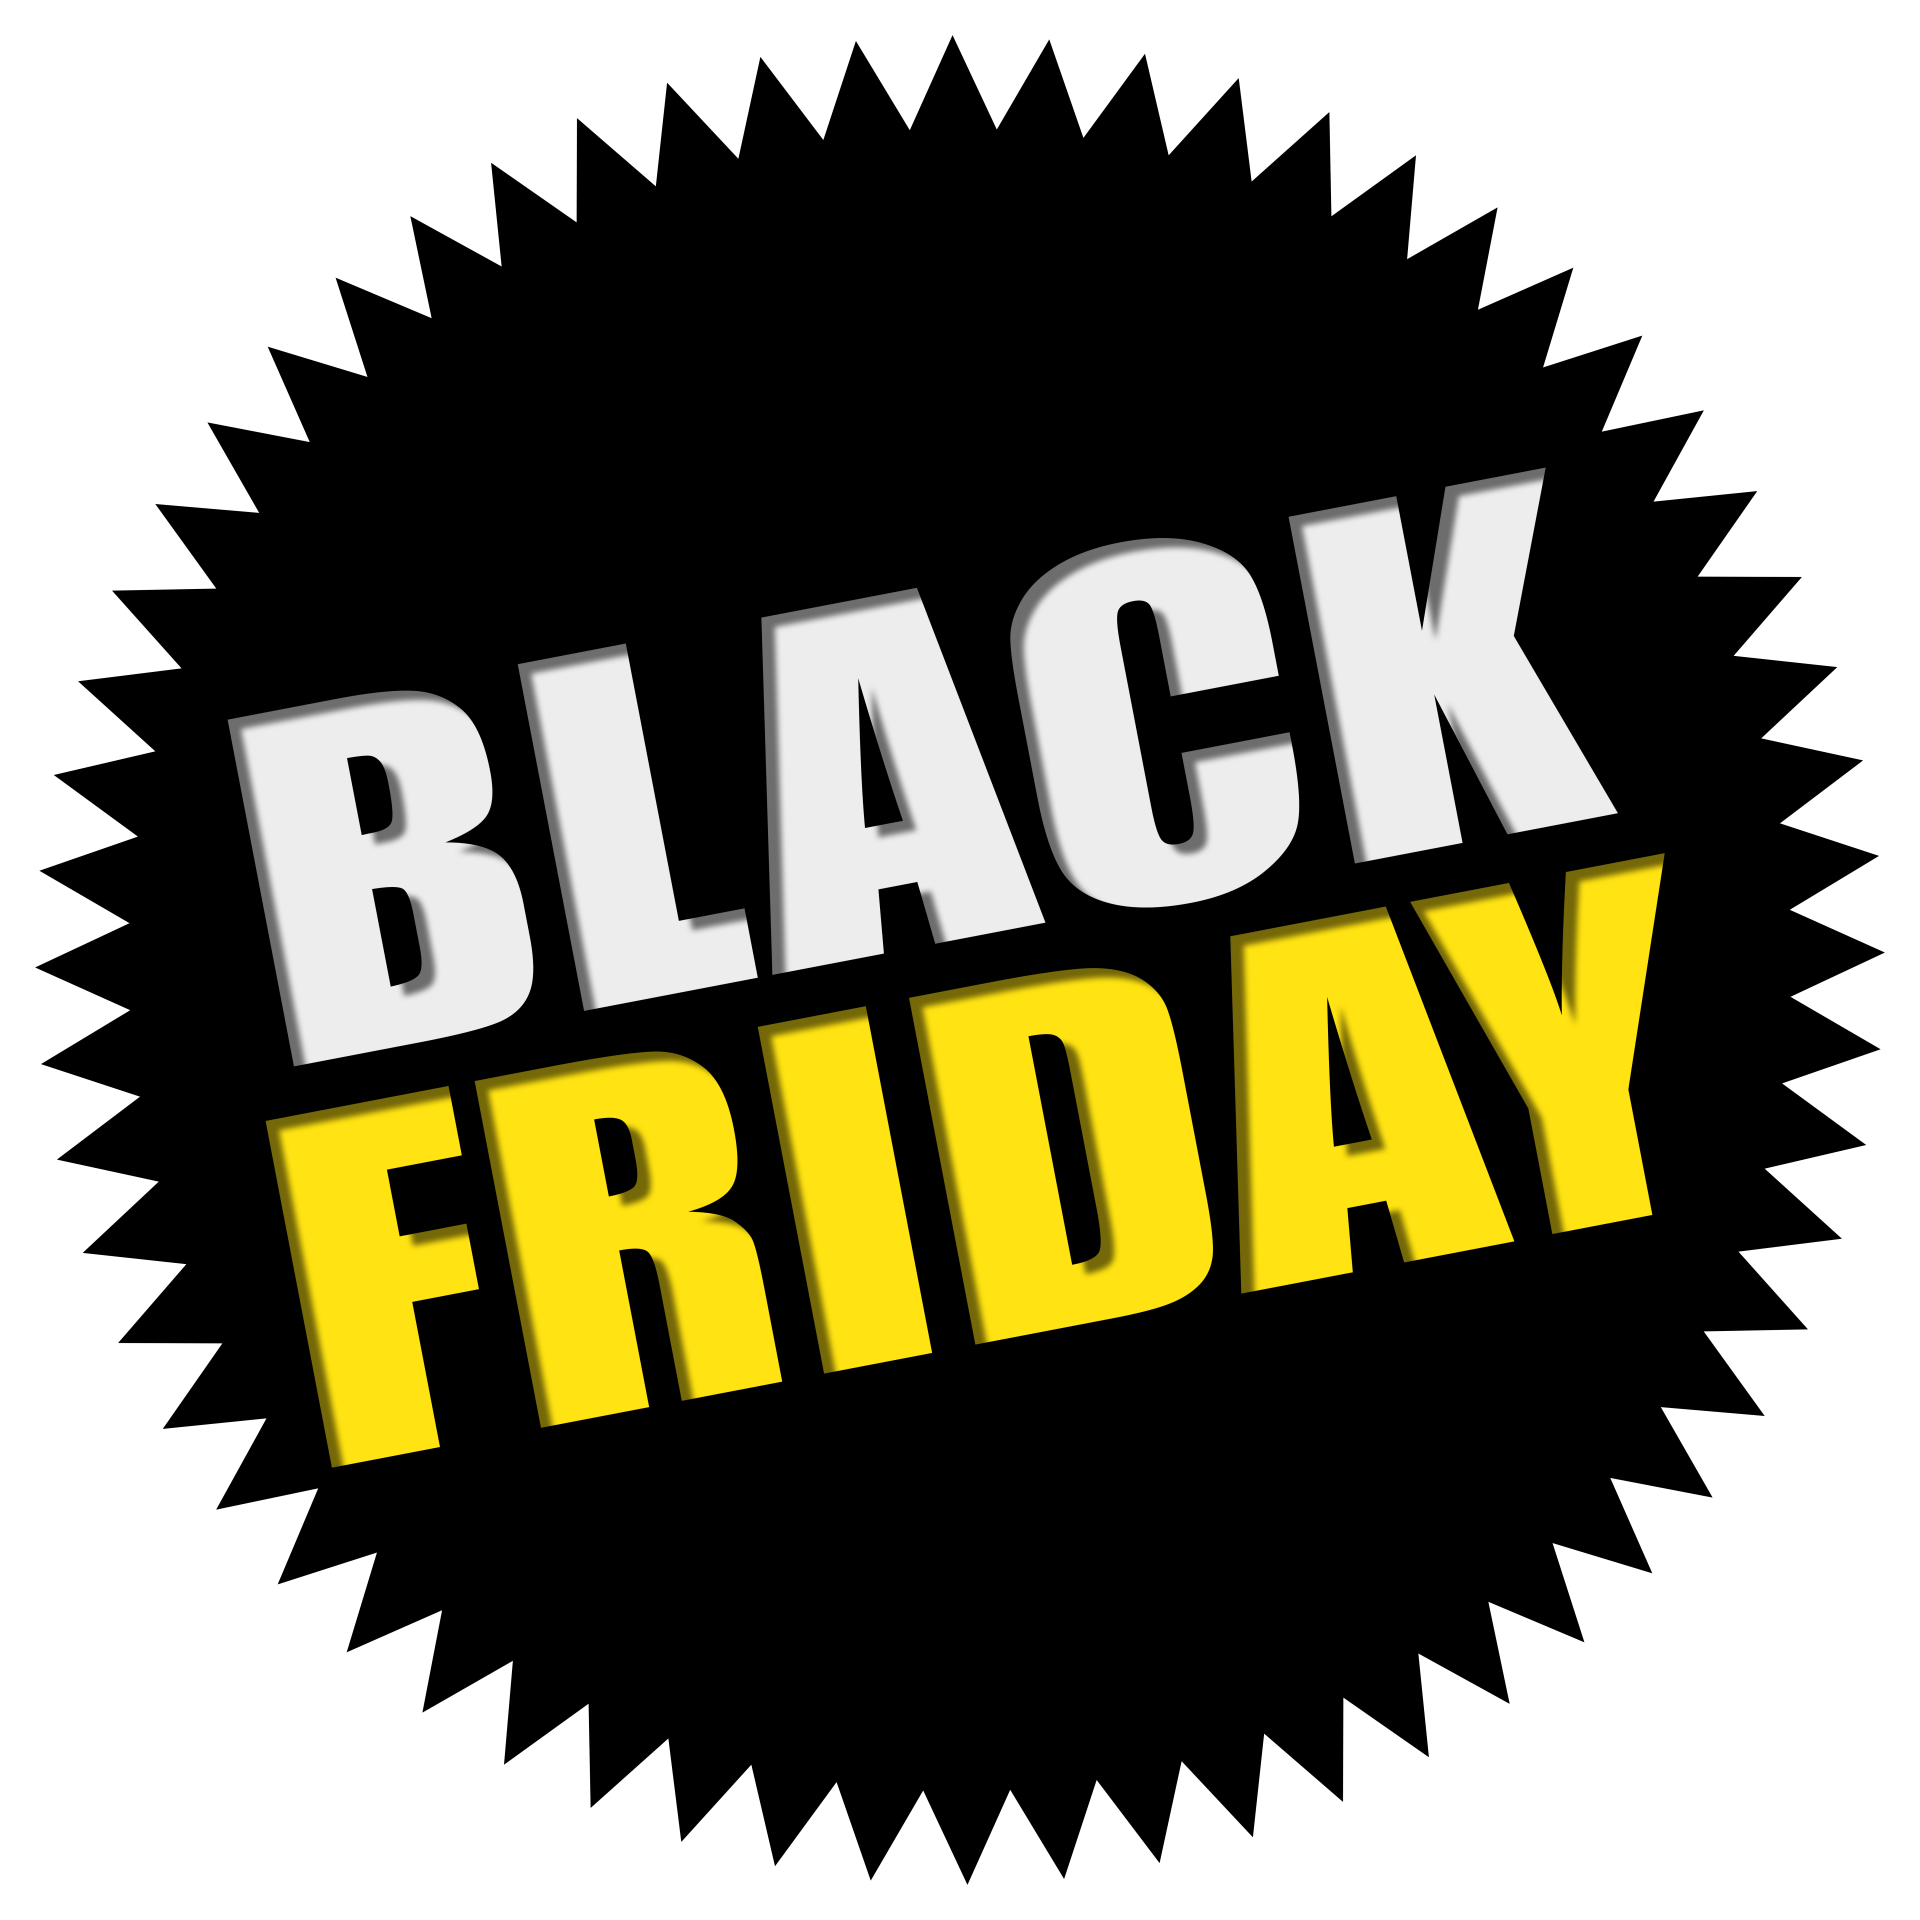 Black Friday sale advert banner